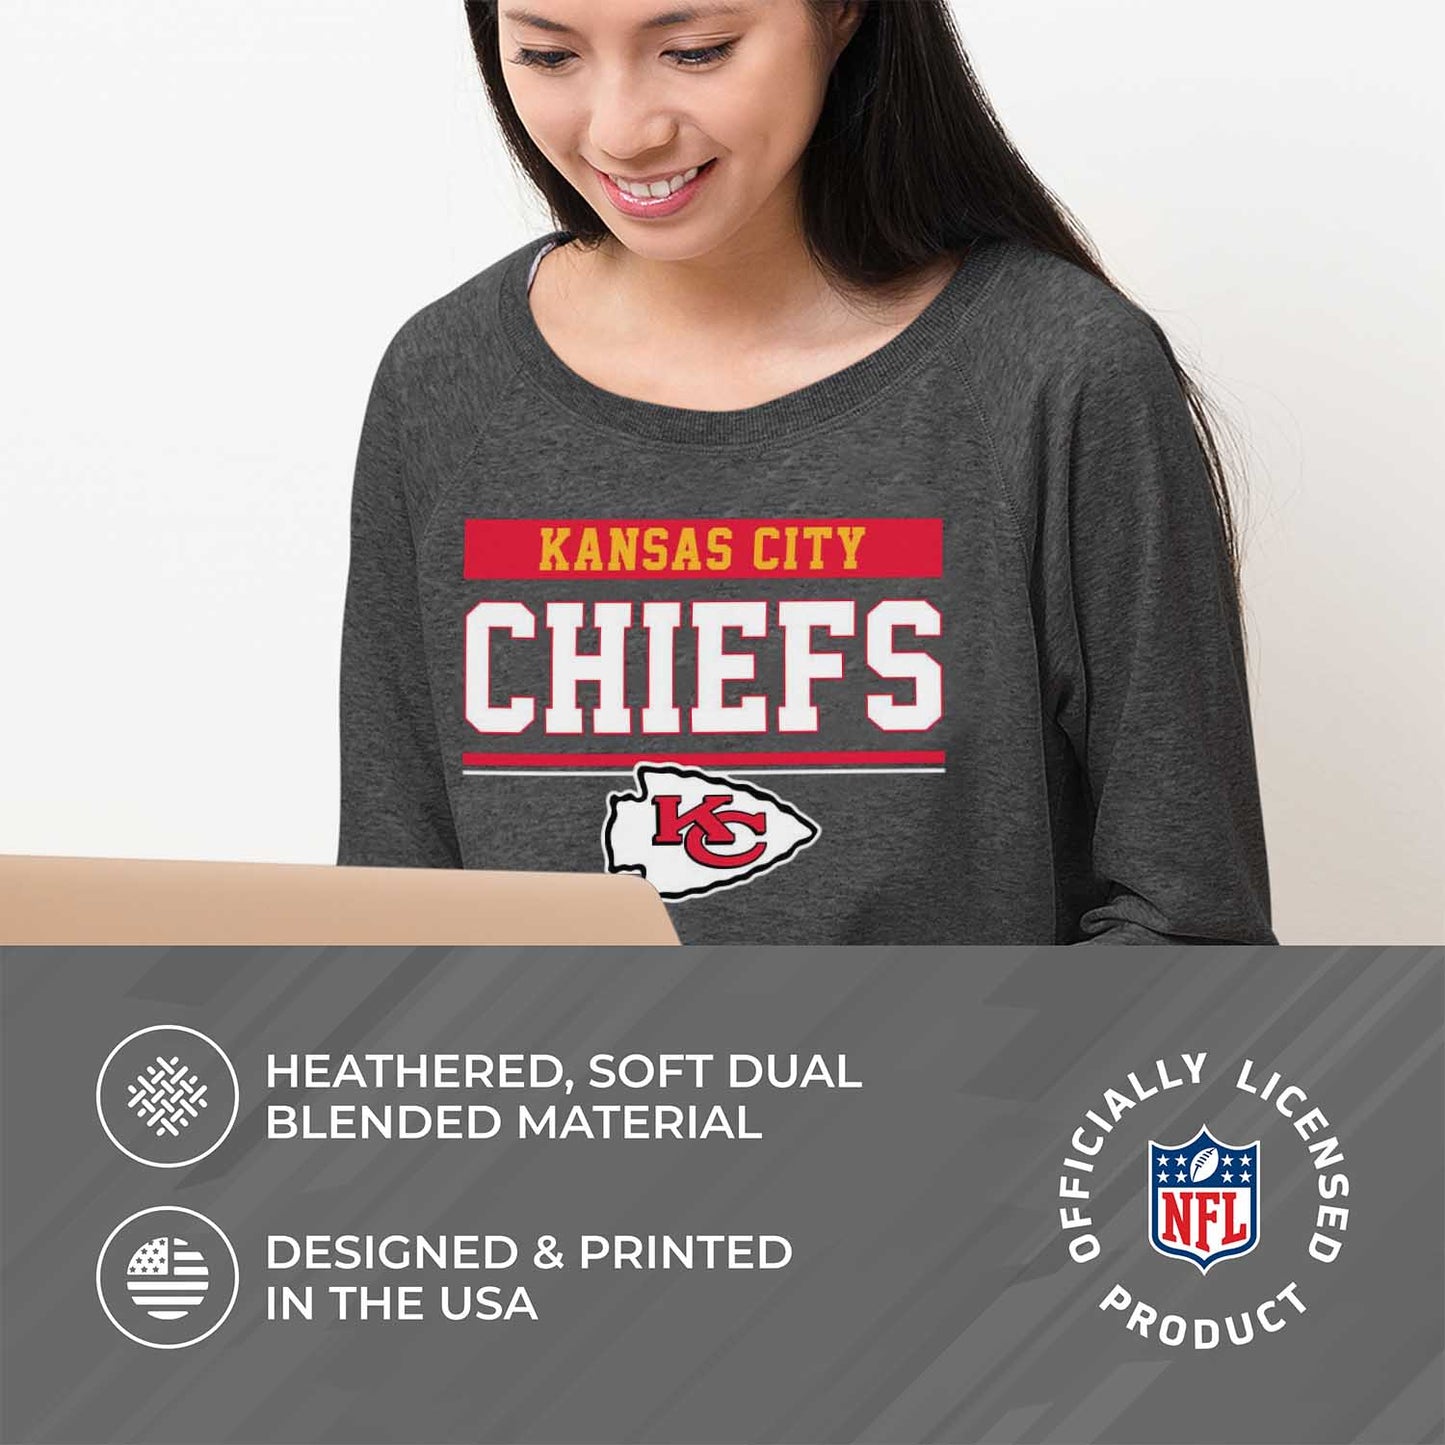 Kansas City Chiefs NFL Womens Charcoal Crew Neck Football Apparel - Charcoal